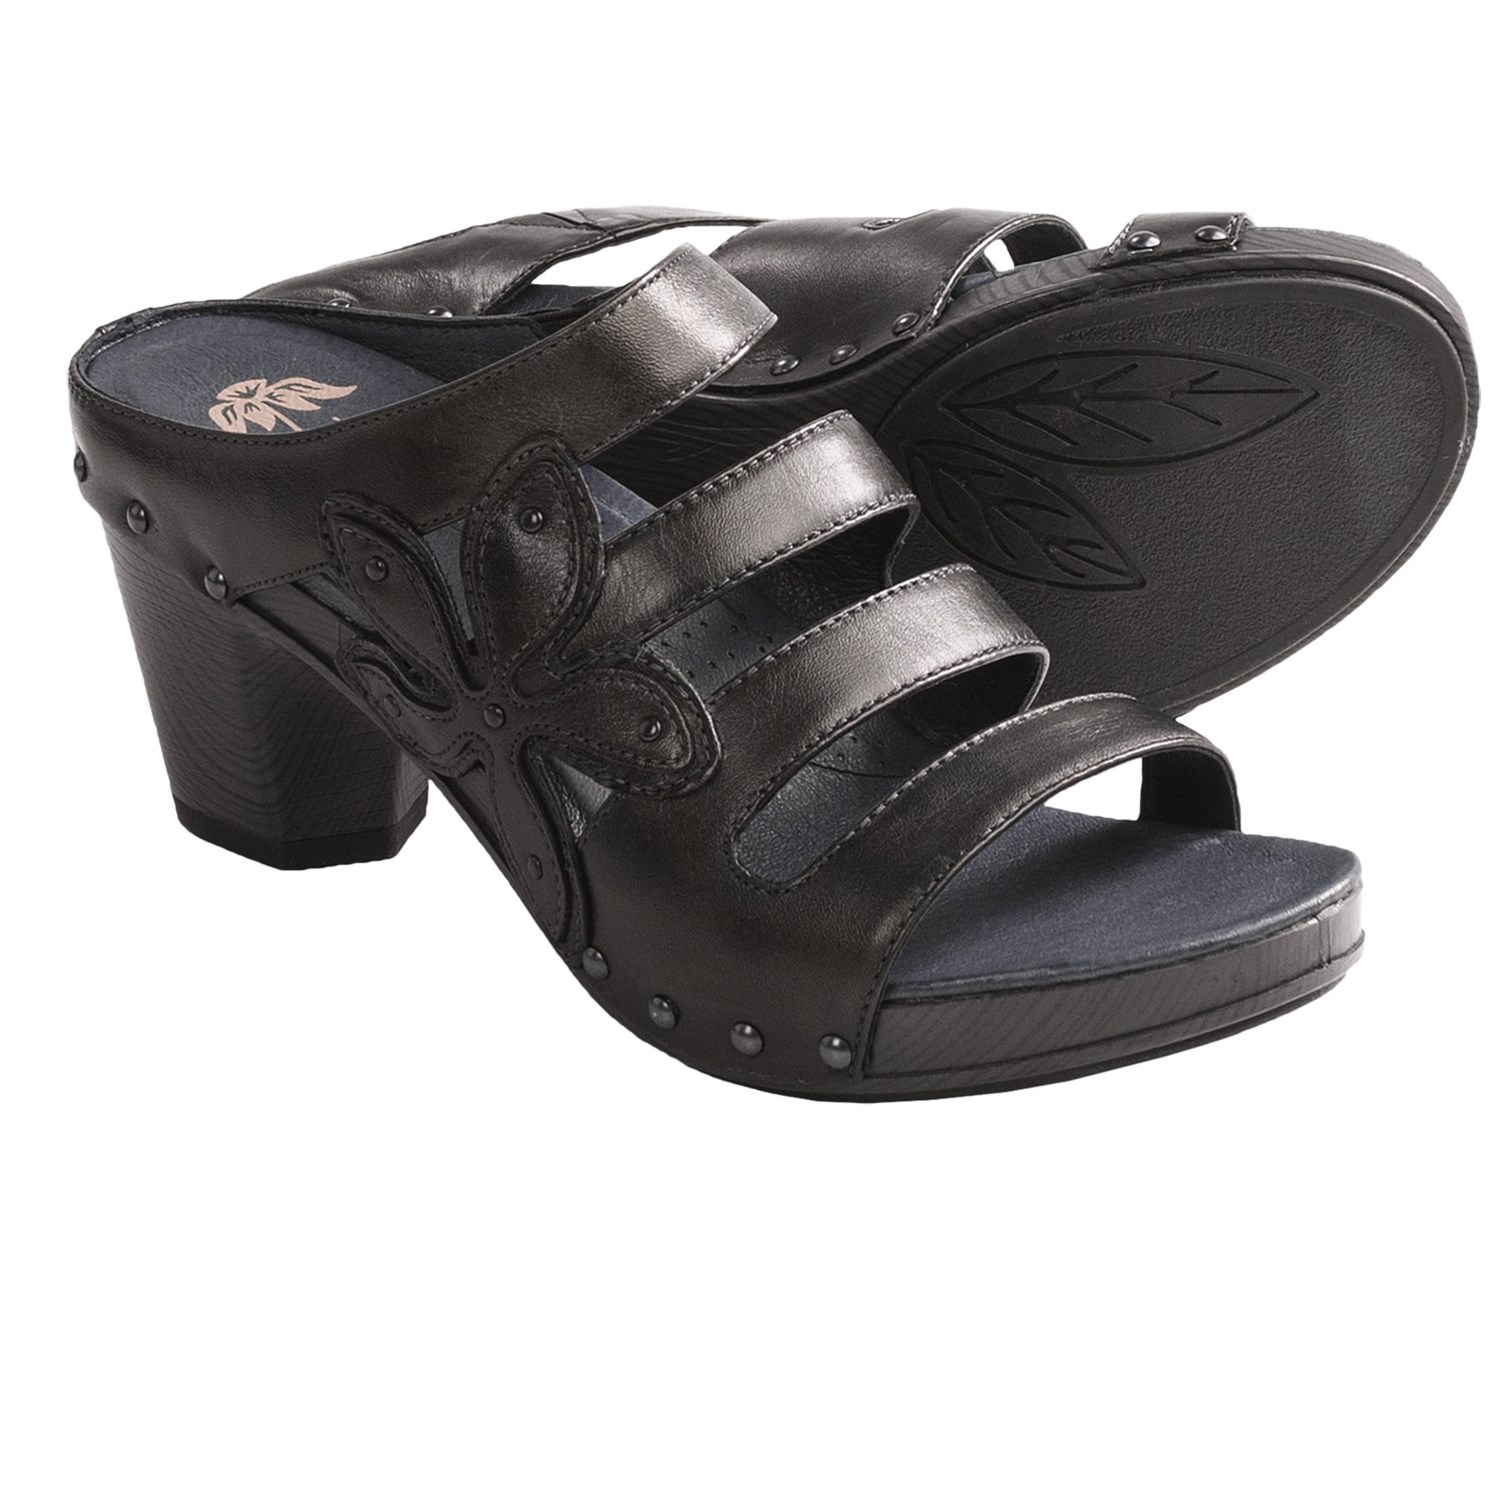 Dansko Nigella Sandals - Leather (For Women) in Graphite Brush Off